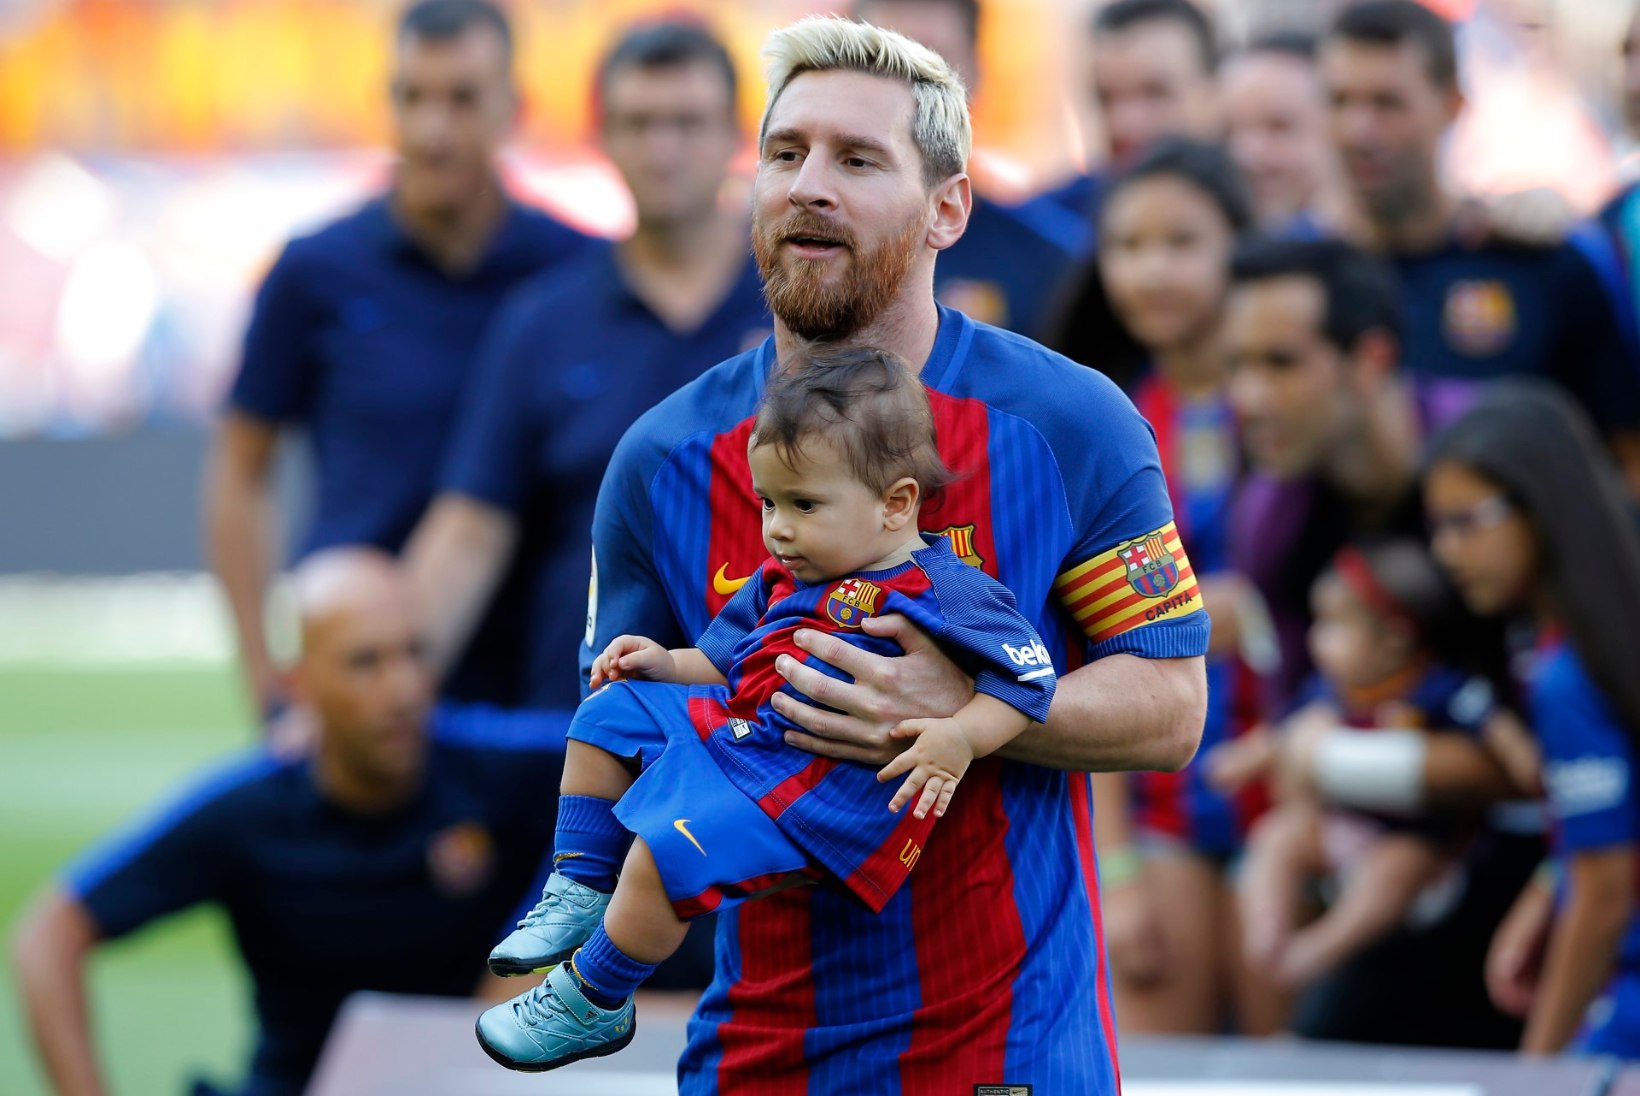 Lionel Messi on kuldsuust lapsega hädas